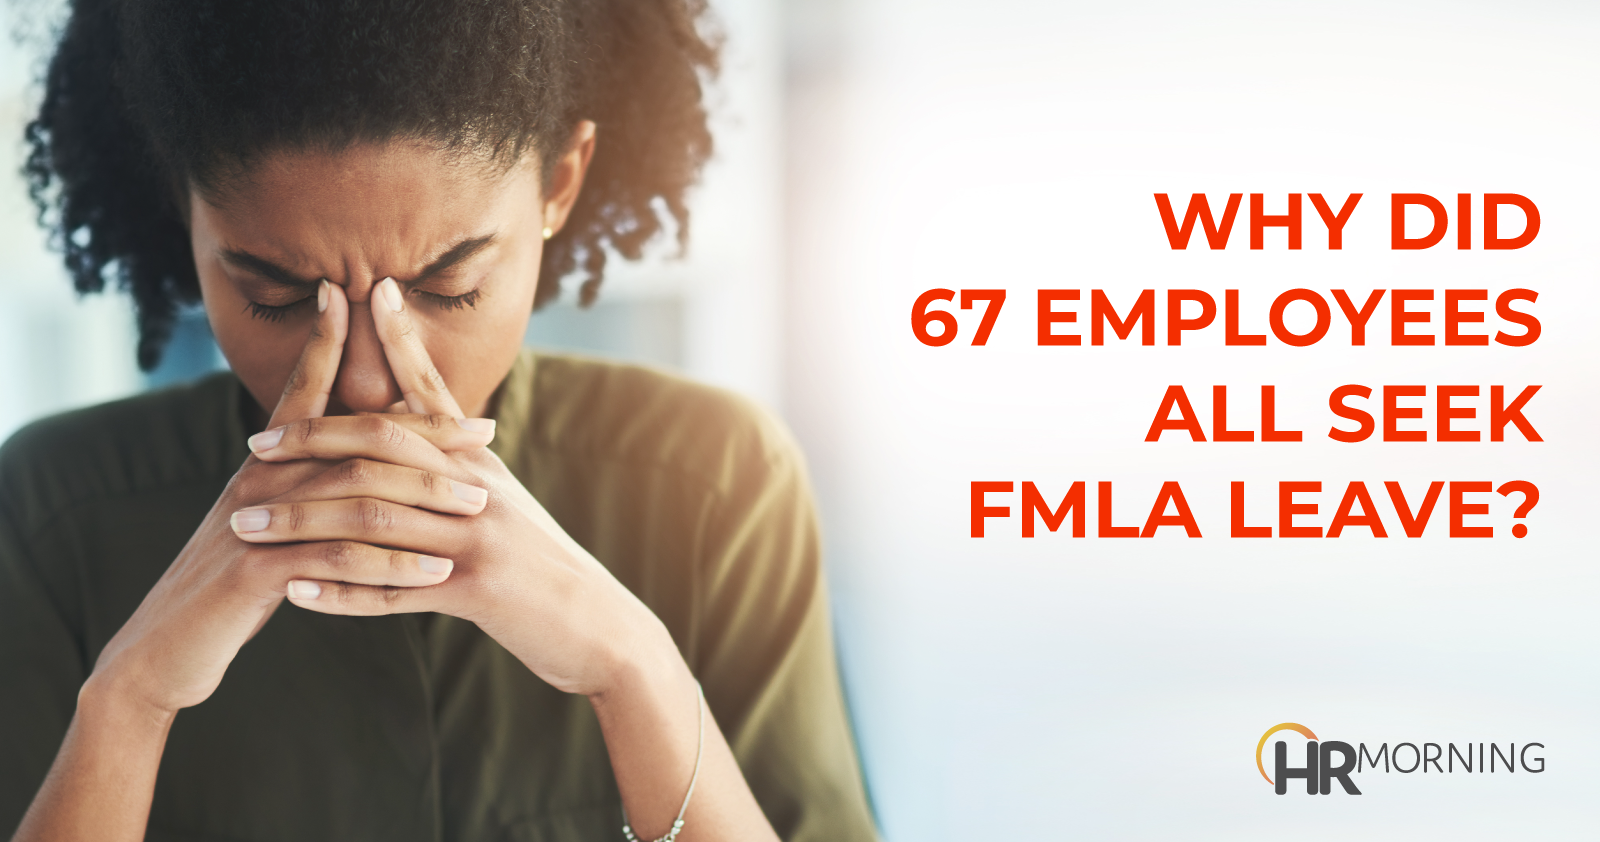 Why did 67 employees all seek FMLA leave?